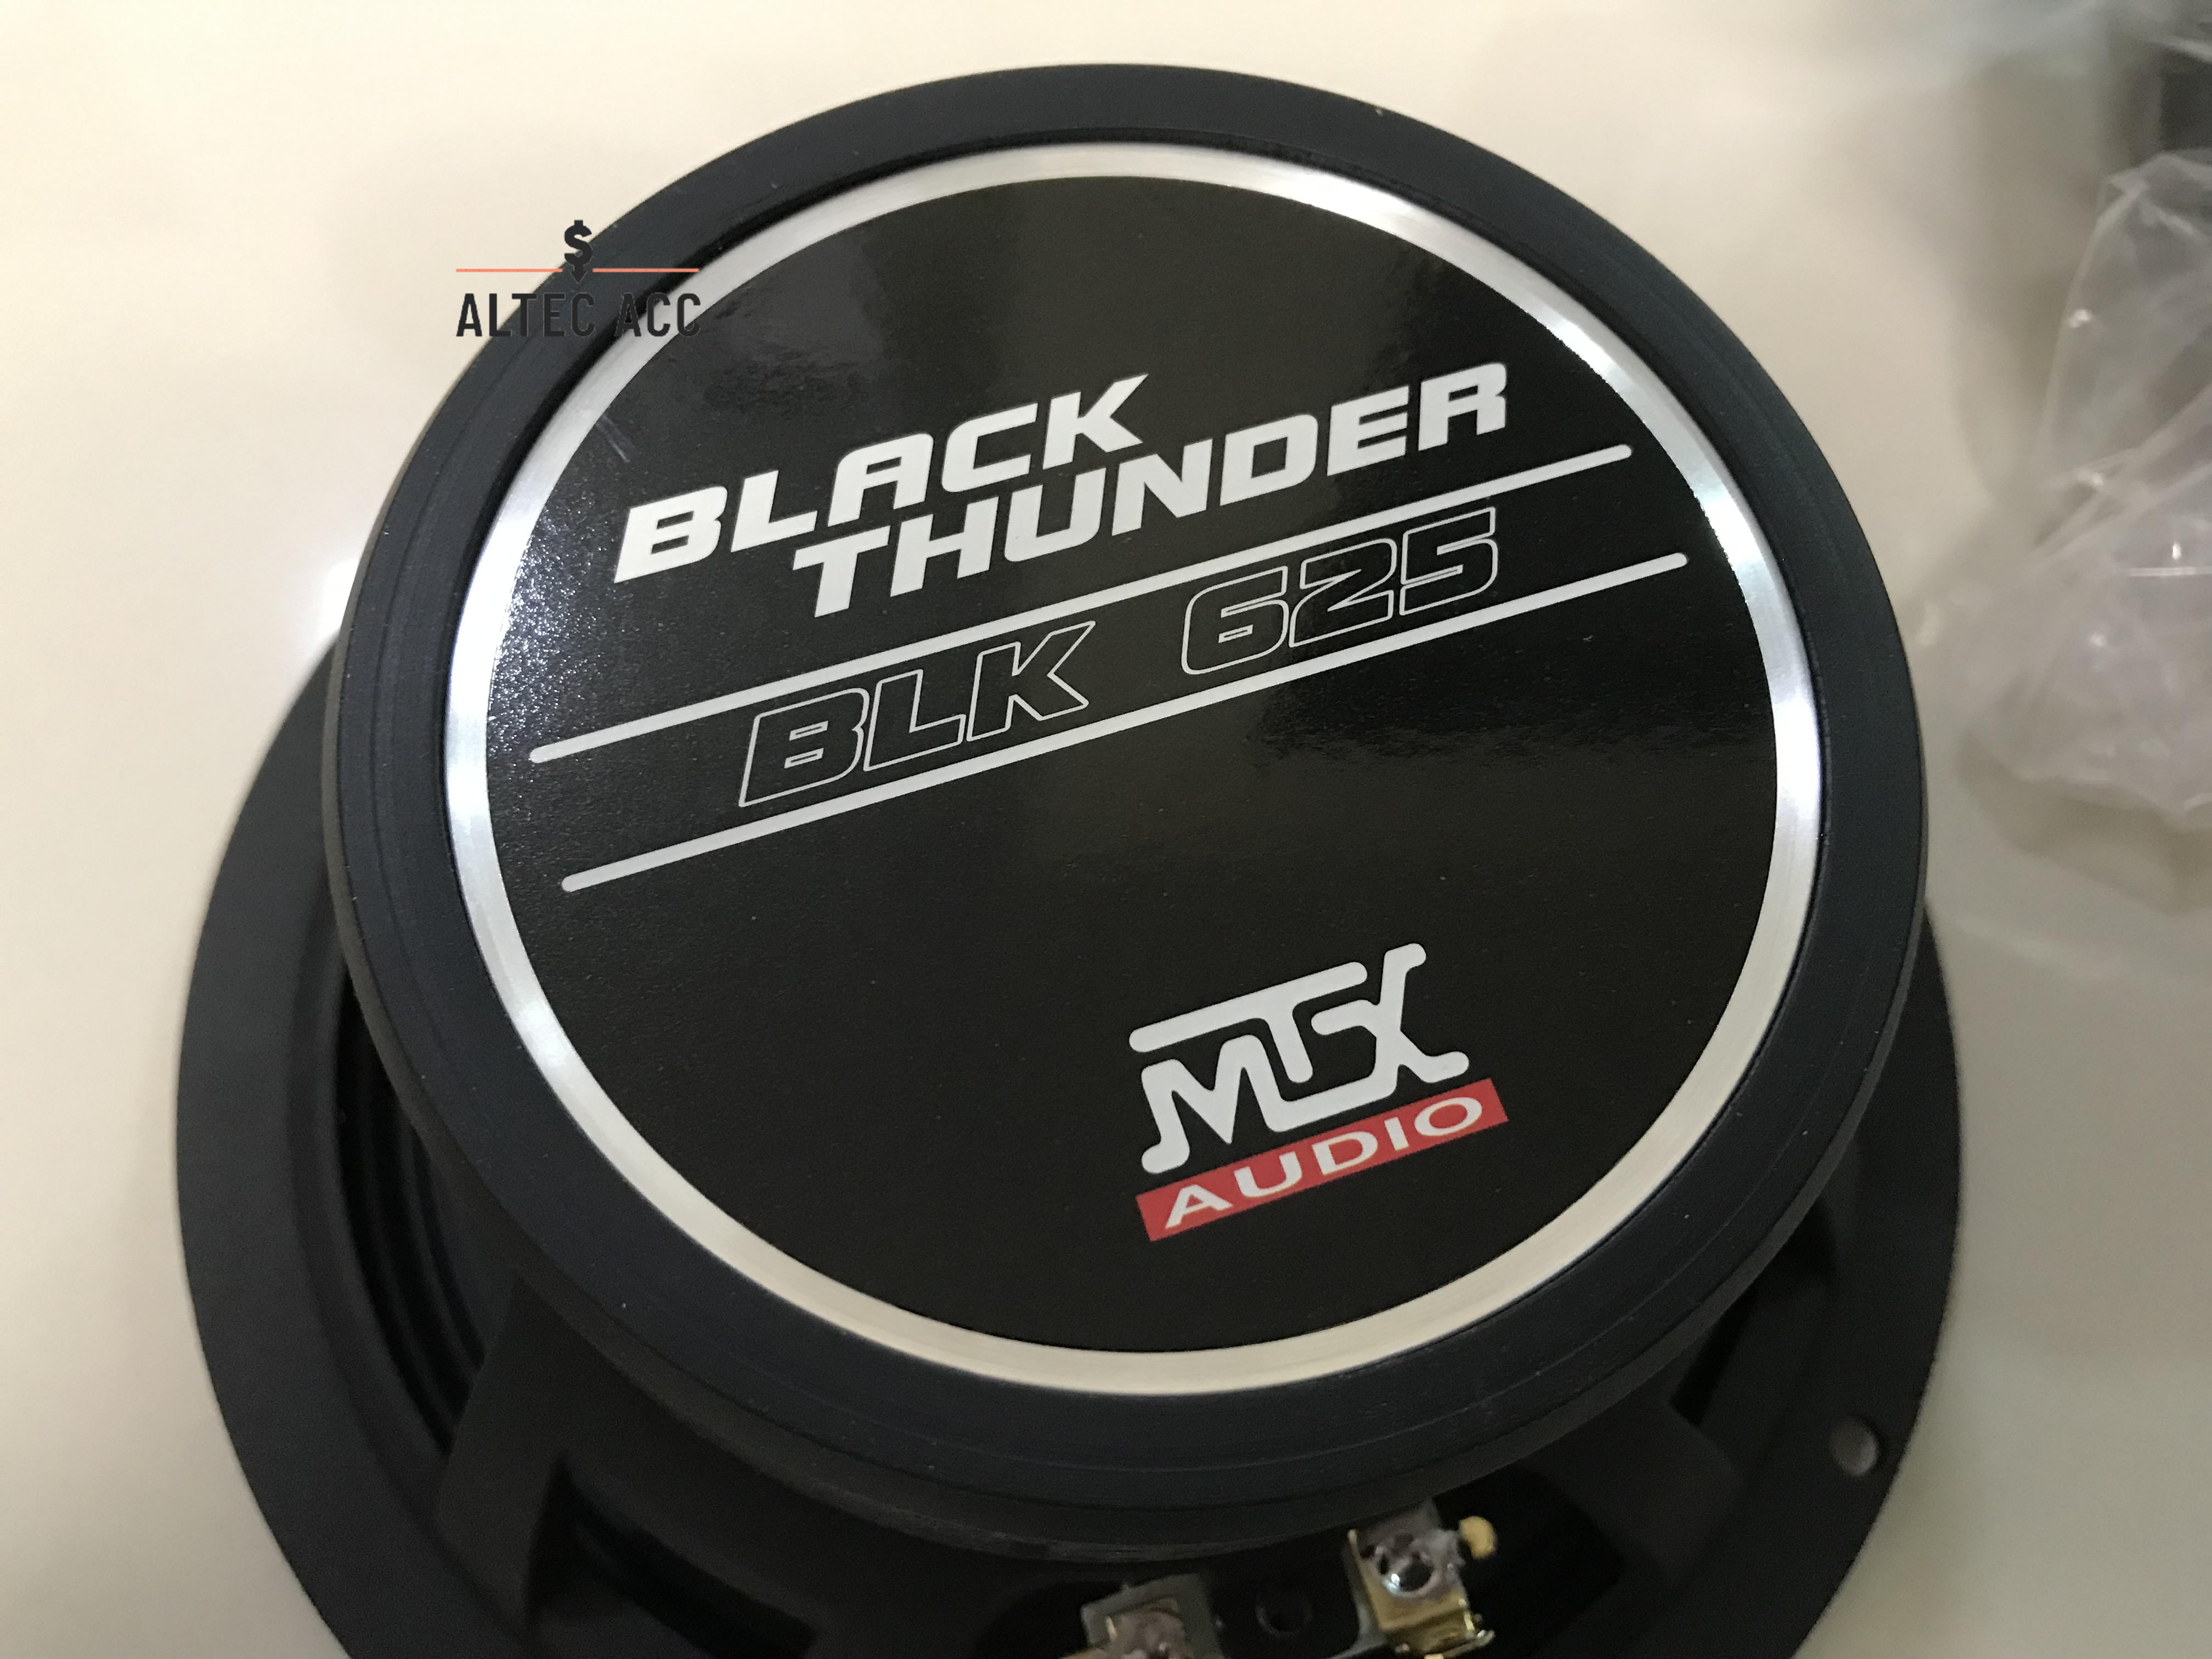 MTX BLACK THUNDER COMPONENT SPEAKER (BLK 625)125Watts Ready Stock